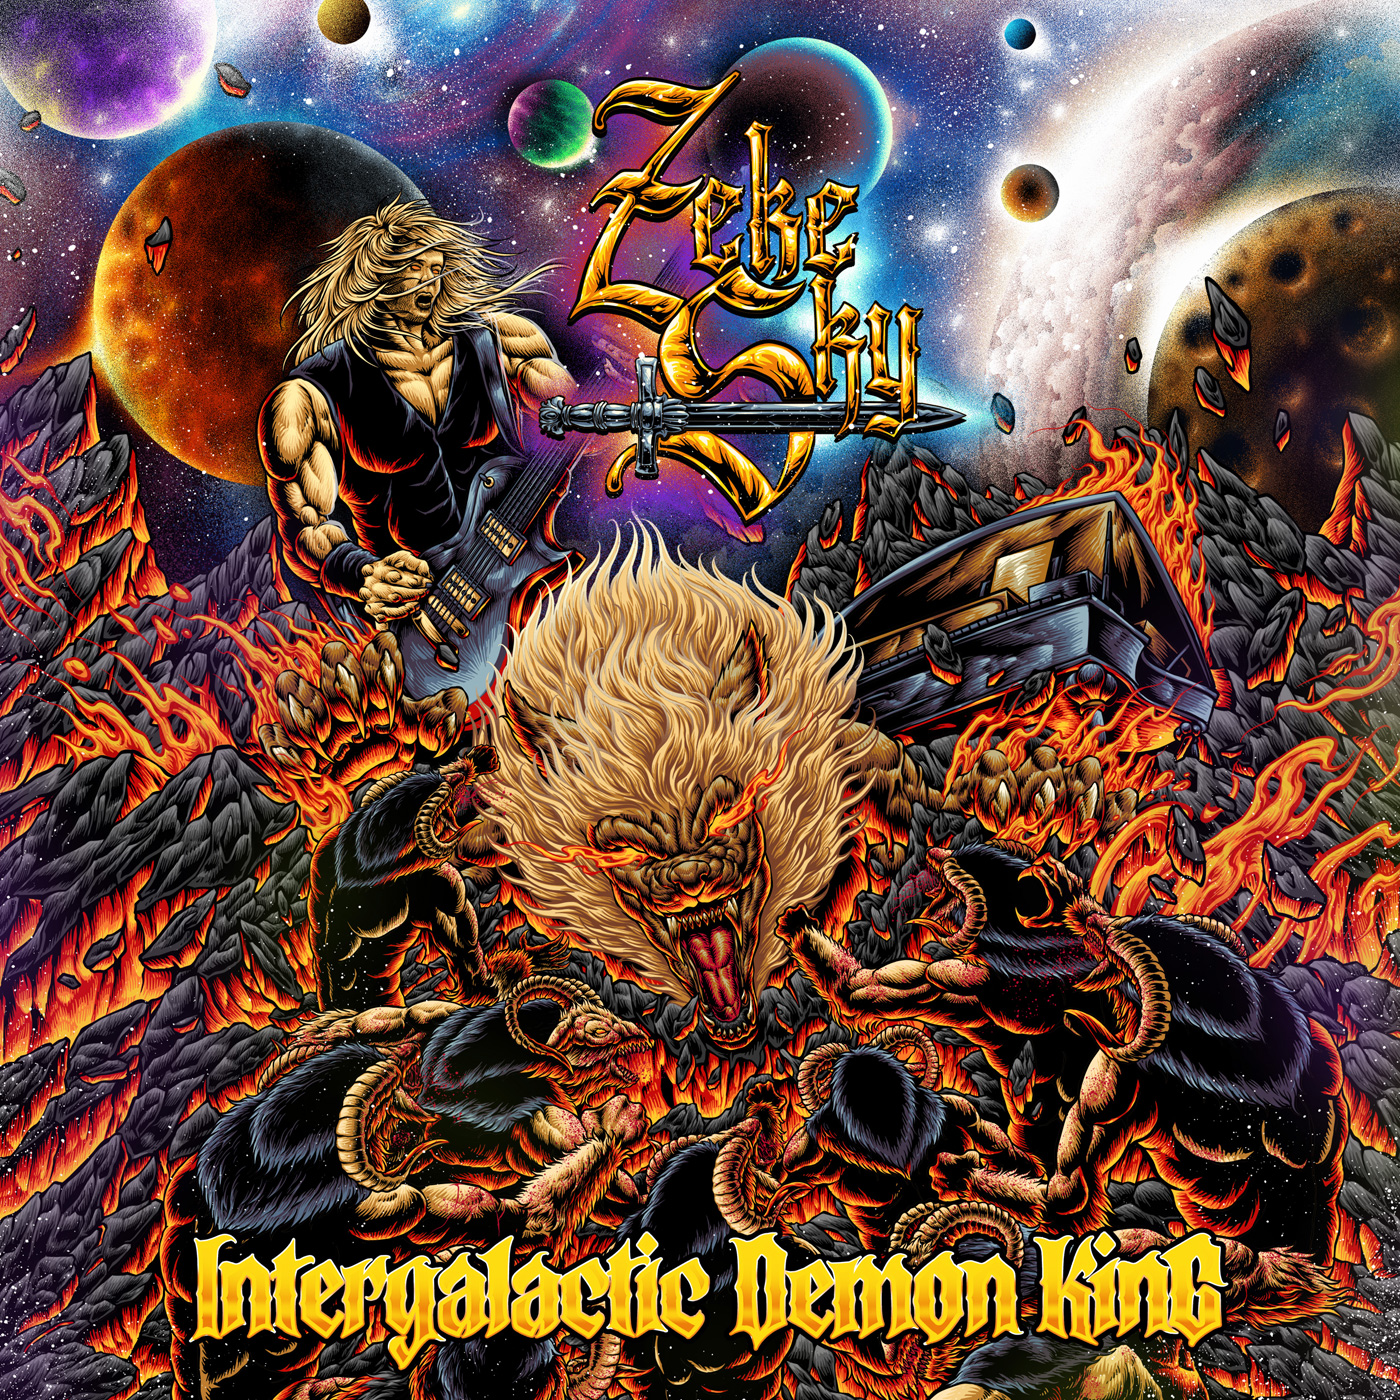 zeke-sky-intergalactic-demon-king-album-review